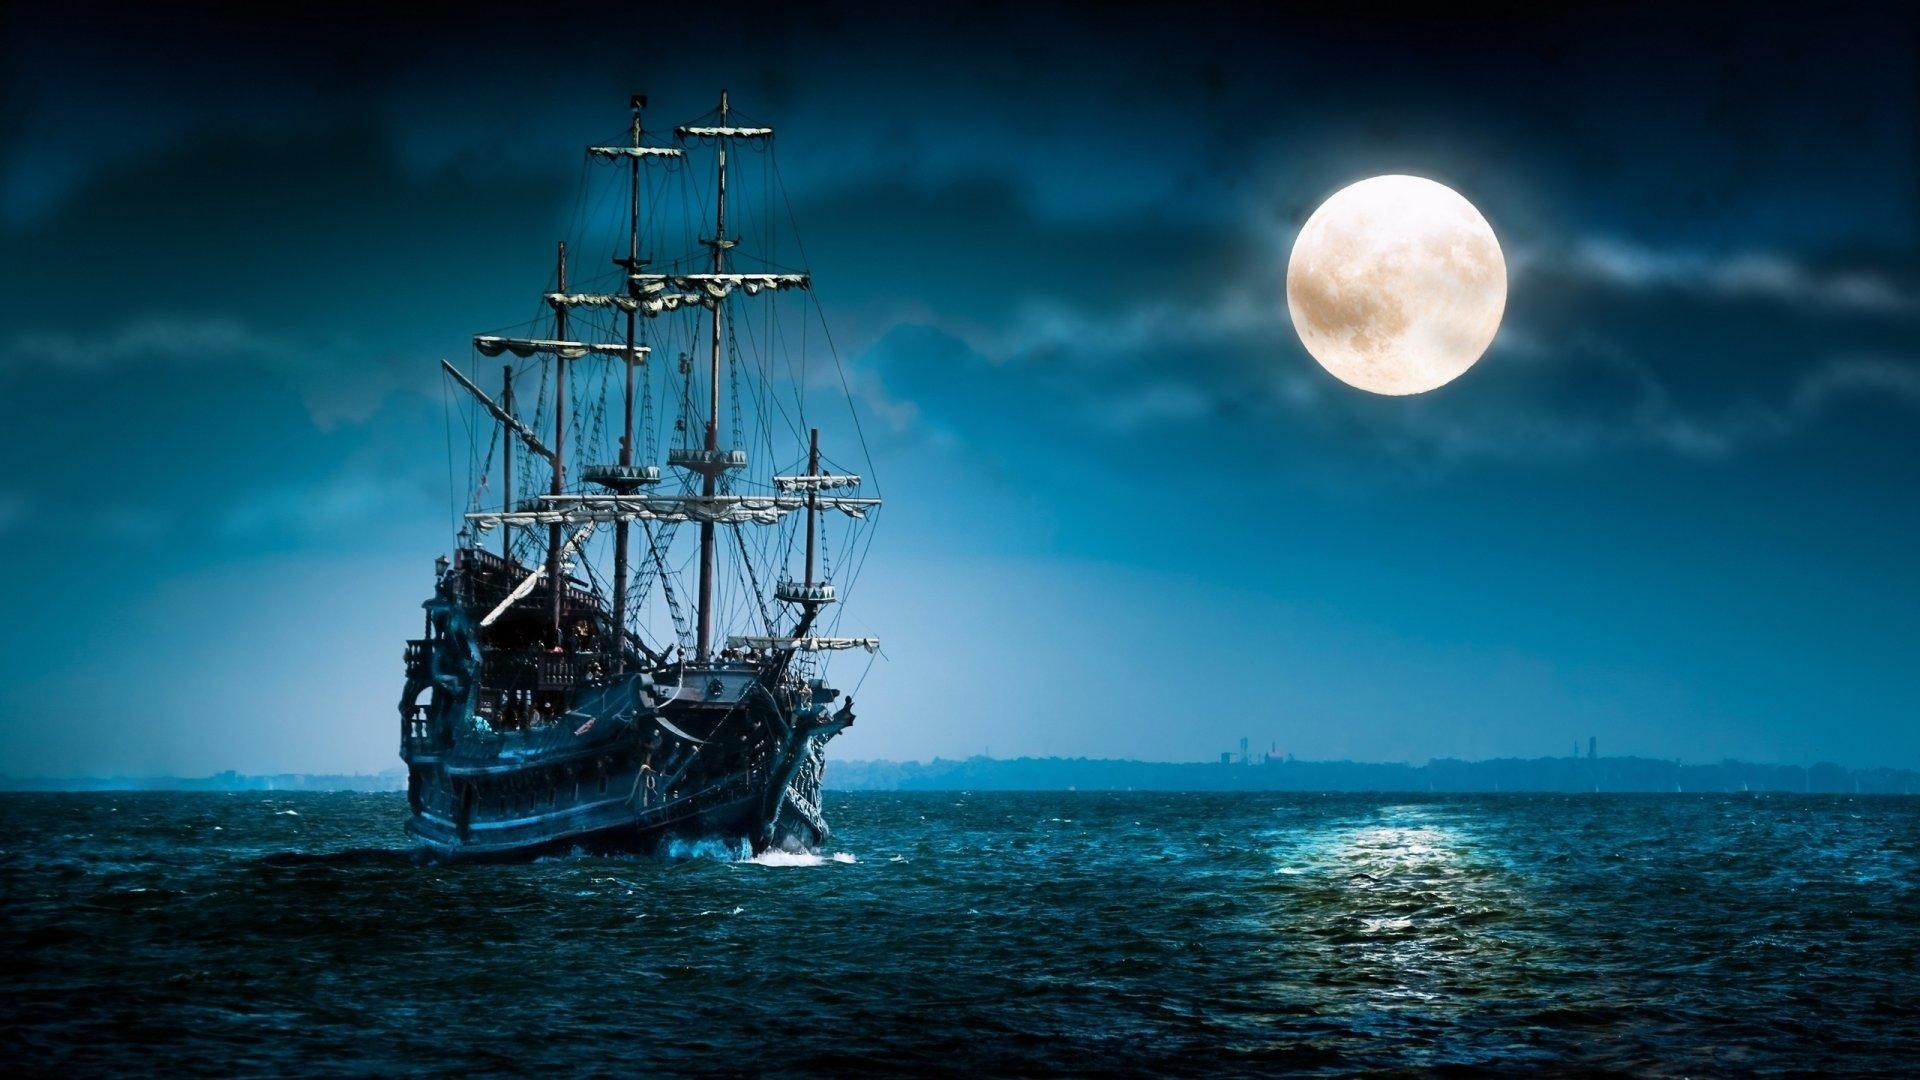 Sailboat-sea-moon-ship-boat-ocean-night-mood-